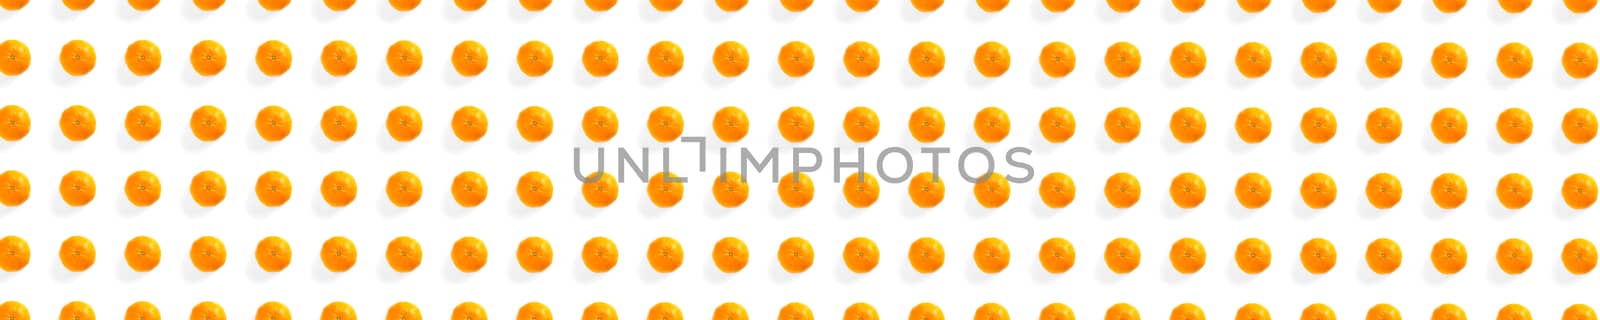 Isolated tangerine citrus collection background. Whole tangerines or mandarin orange fruits isolated on white background. Banner by PhotoTime